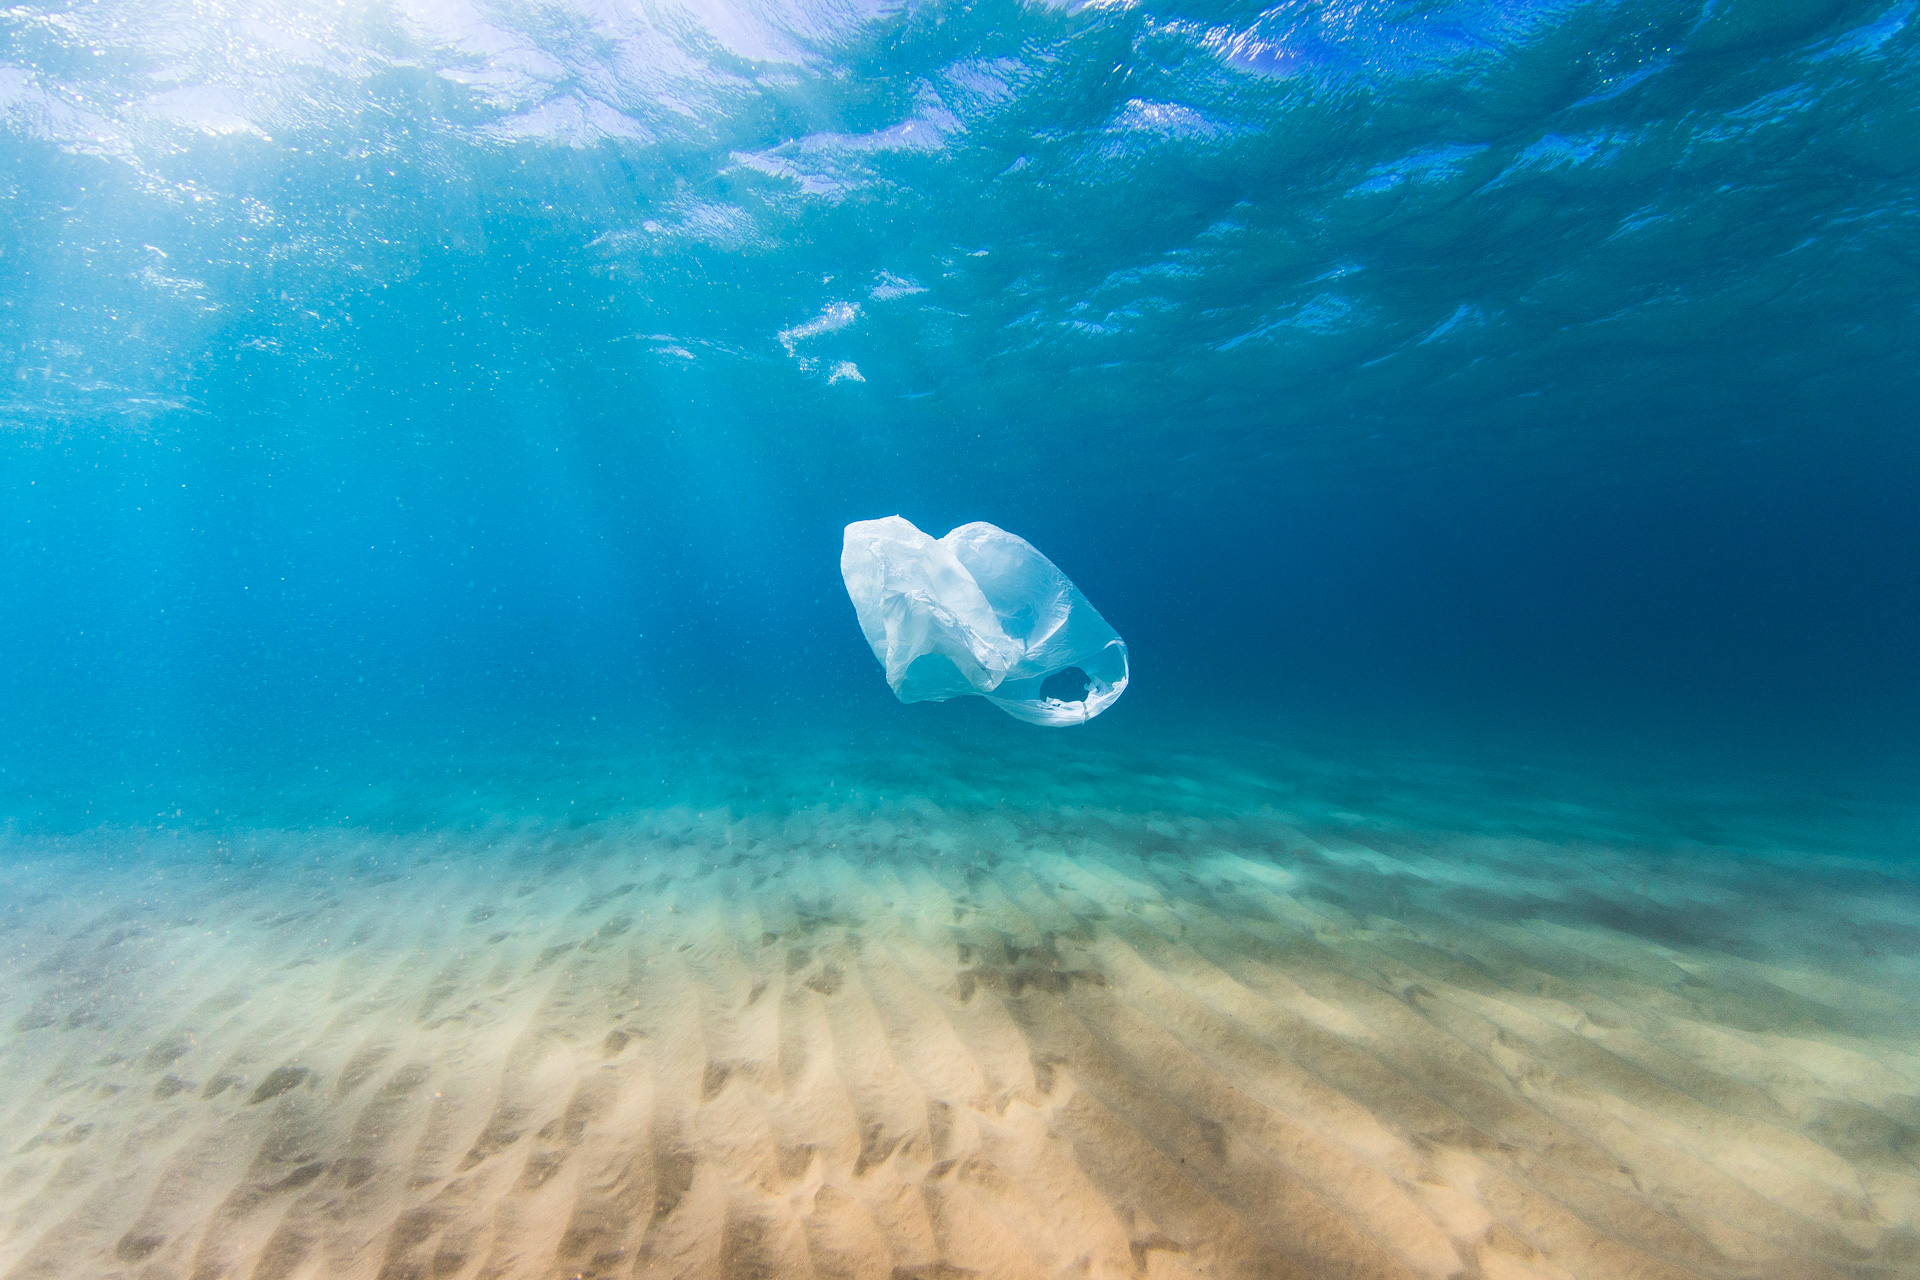 Plastics and pollution